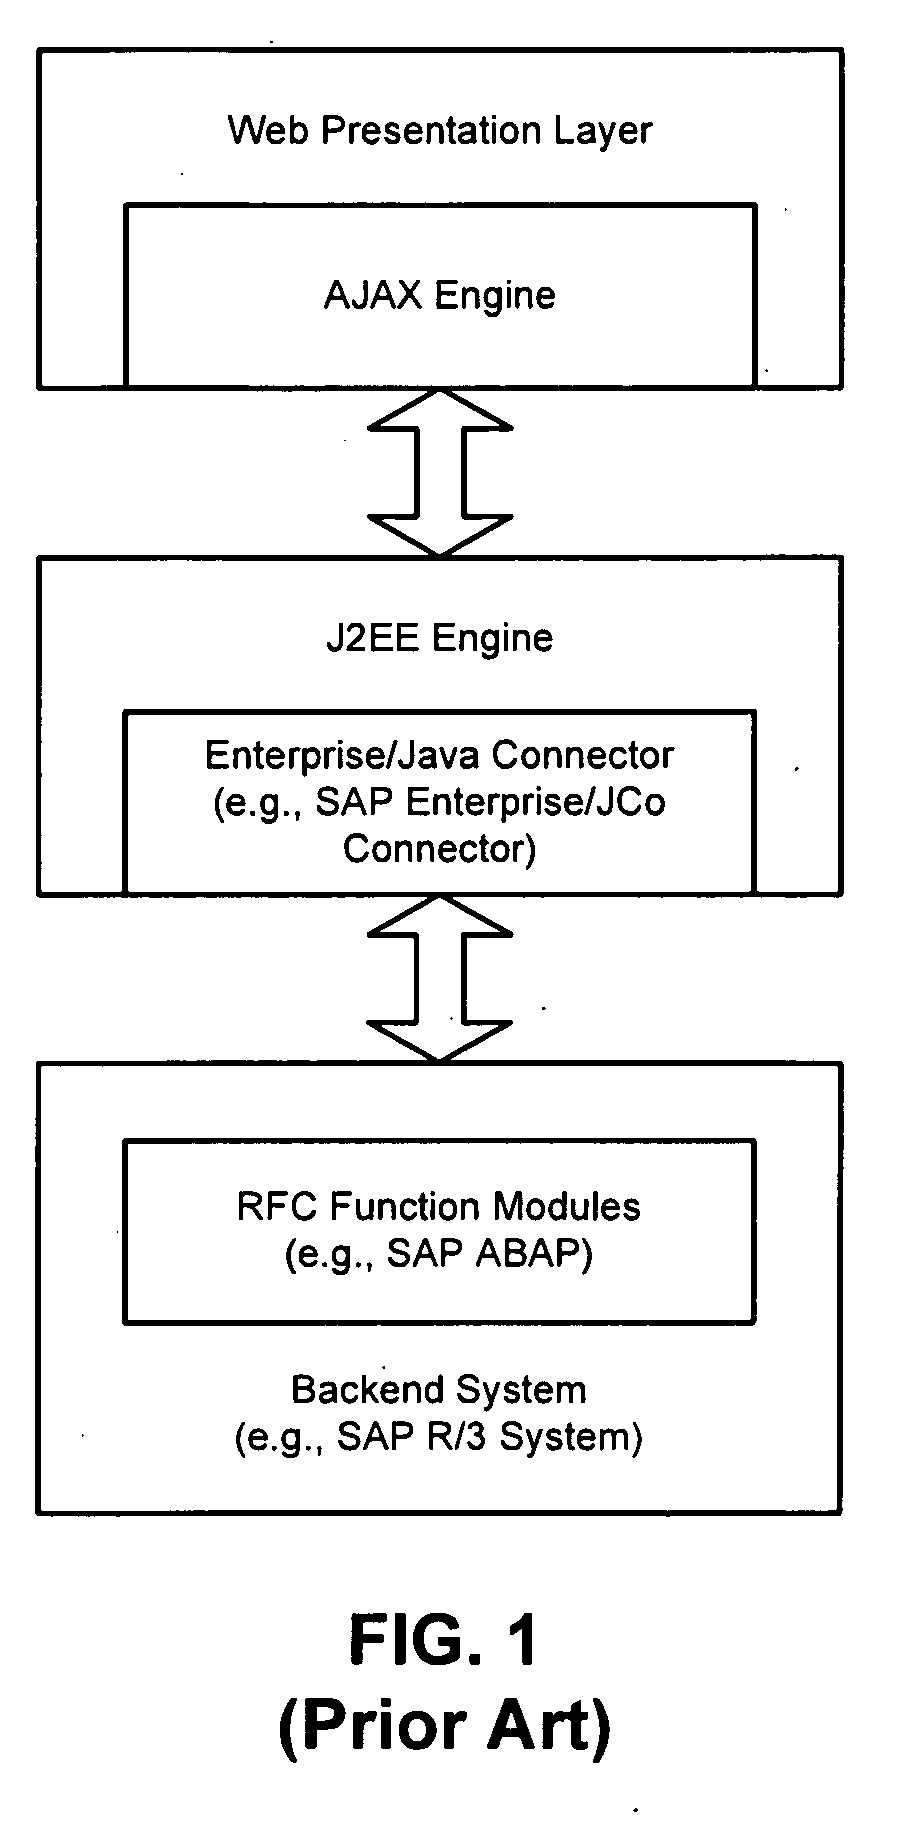 Extended enterprise connector framework using direct web remoting (DWR)